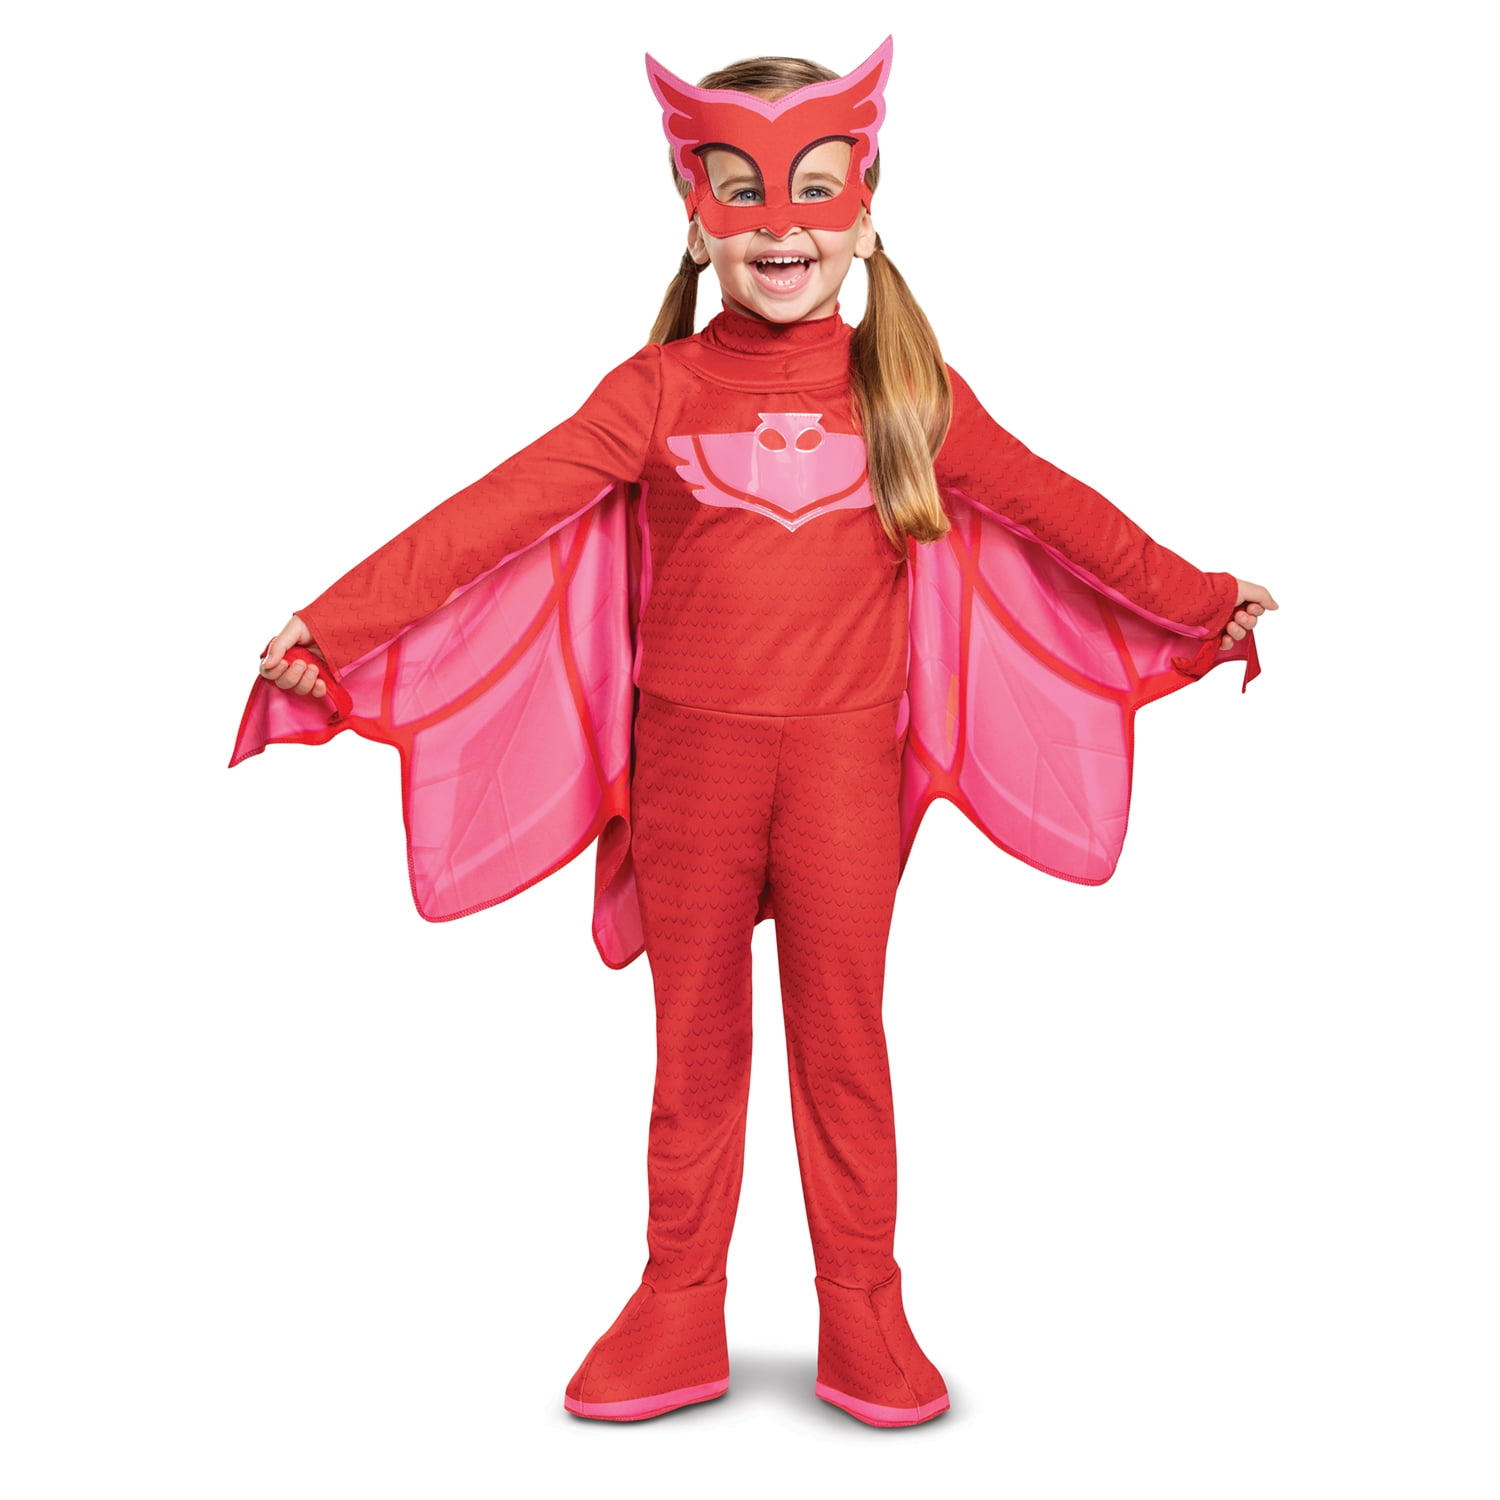 Disguise Girl's Halloween Fancy-Dress Costume for Toddler, 2T - Walmart.com